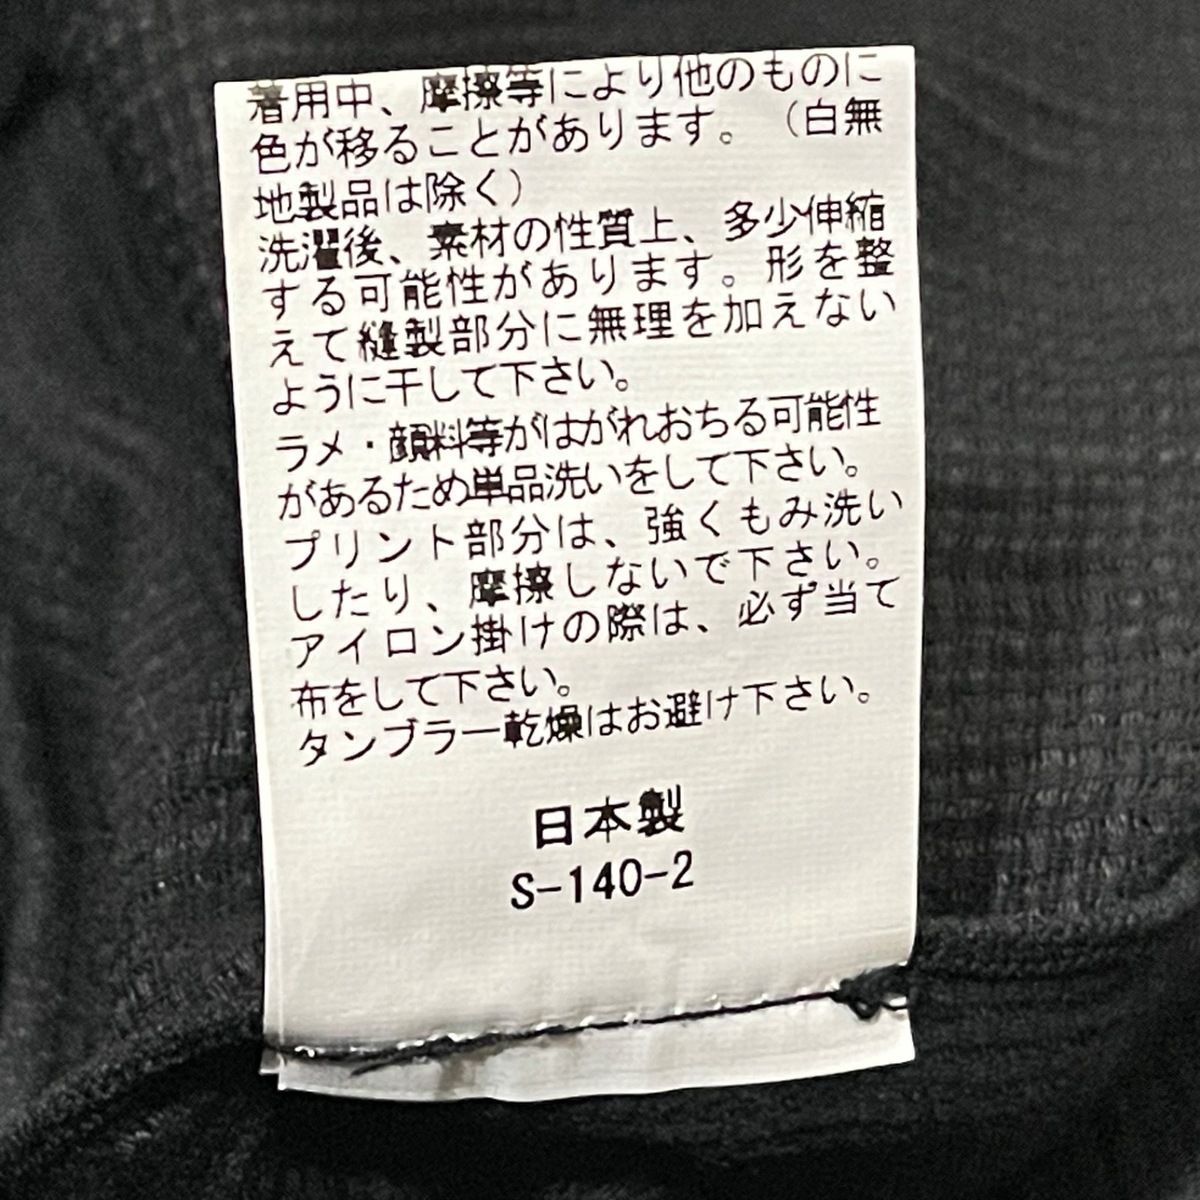 SOU・SOU(ソウソウ) コート サイズL レディース美品 - 黒×グレー 長袖/ロング丈/春/秋